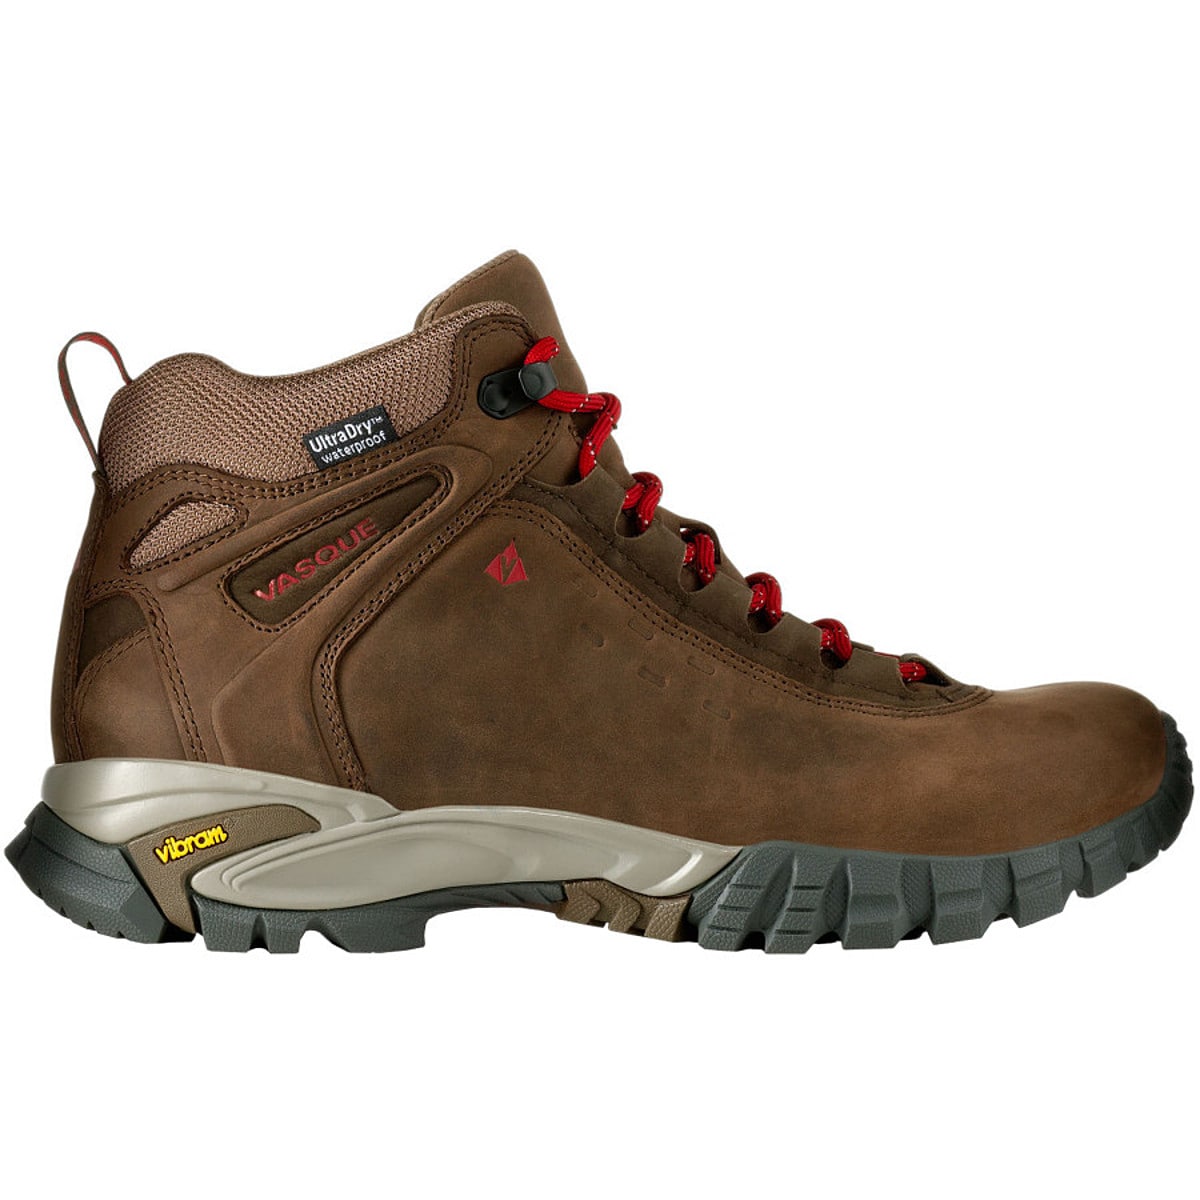 Vasque Talus UltraDry Hiking Boot - Men's | eBay